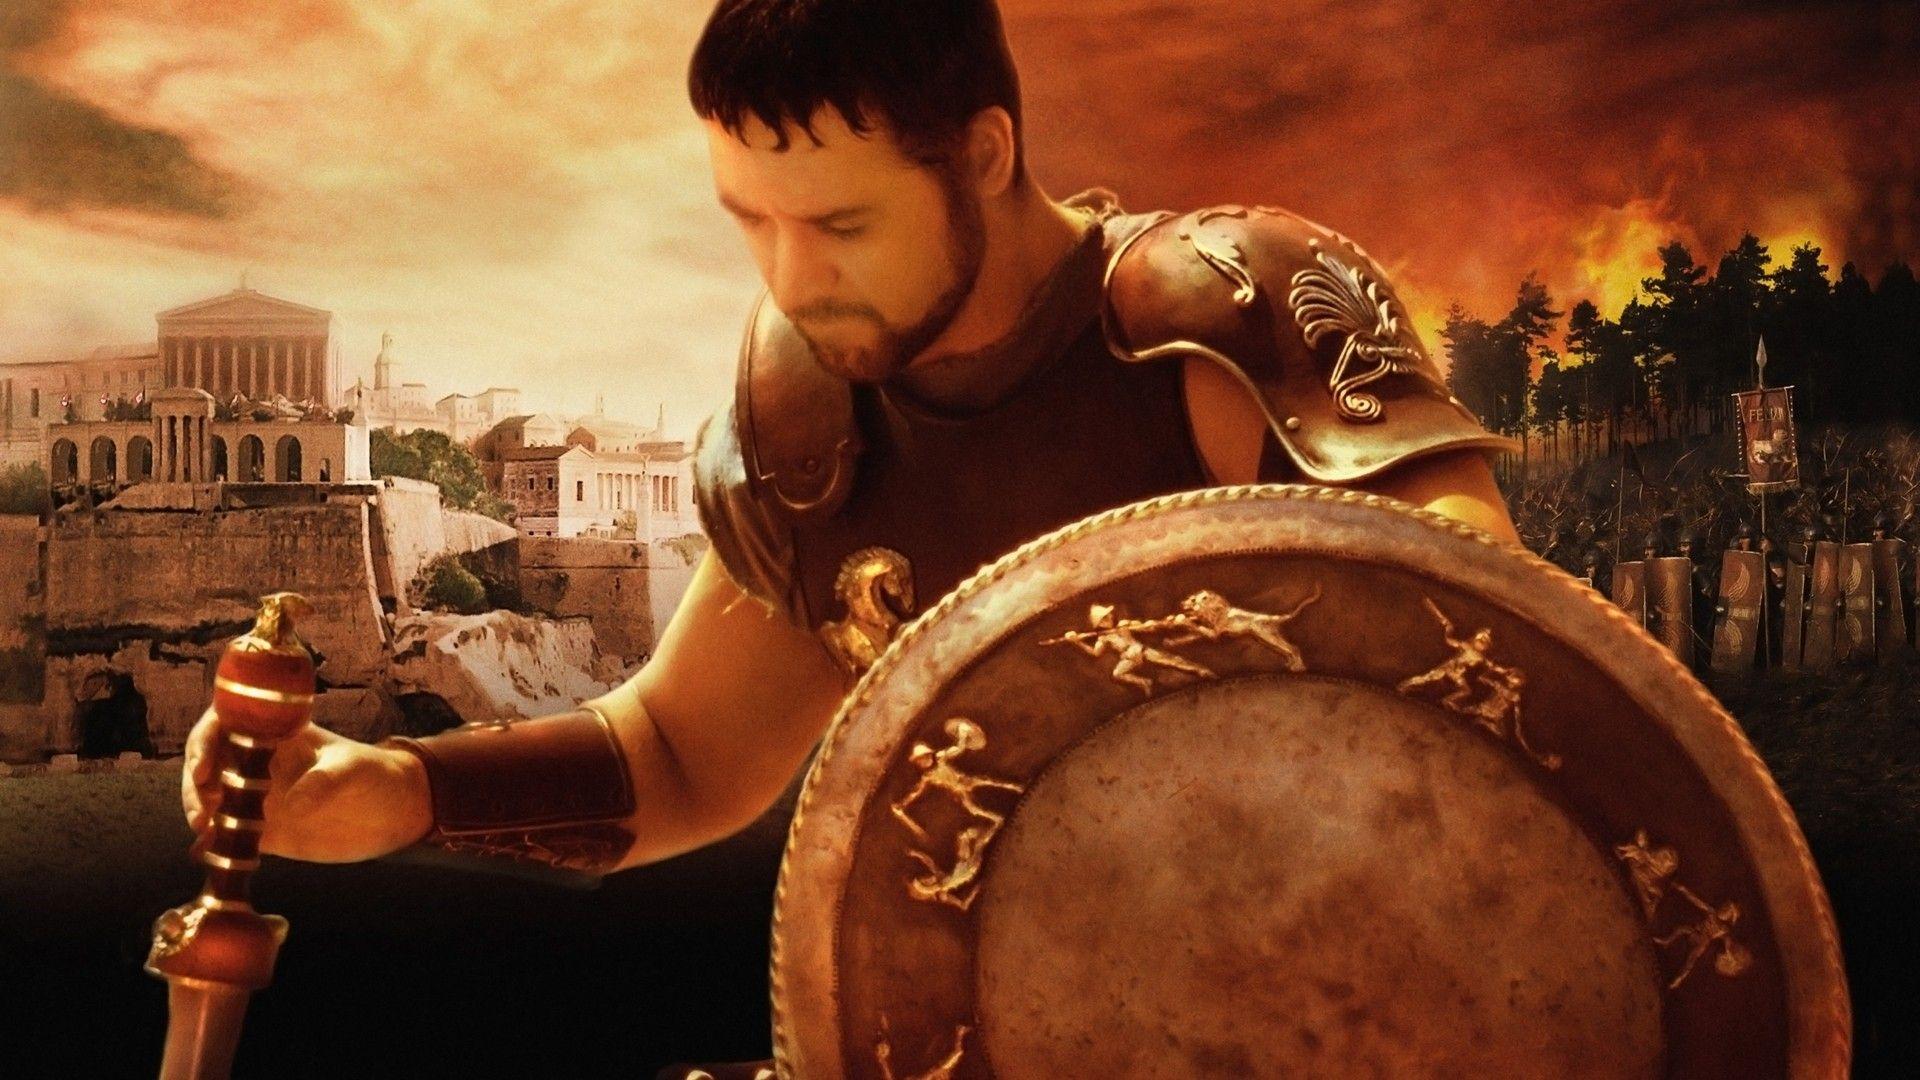 Gladiator (movie) Russell Crowe wallpaperx1080